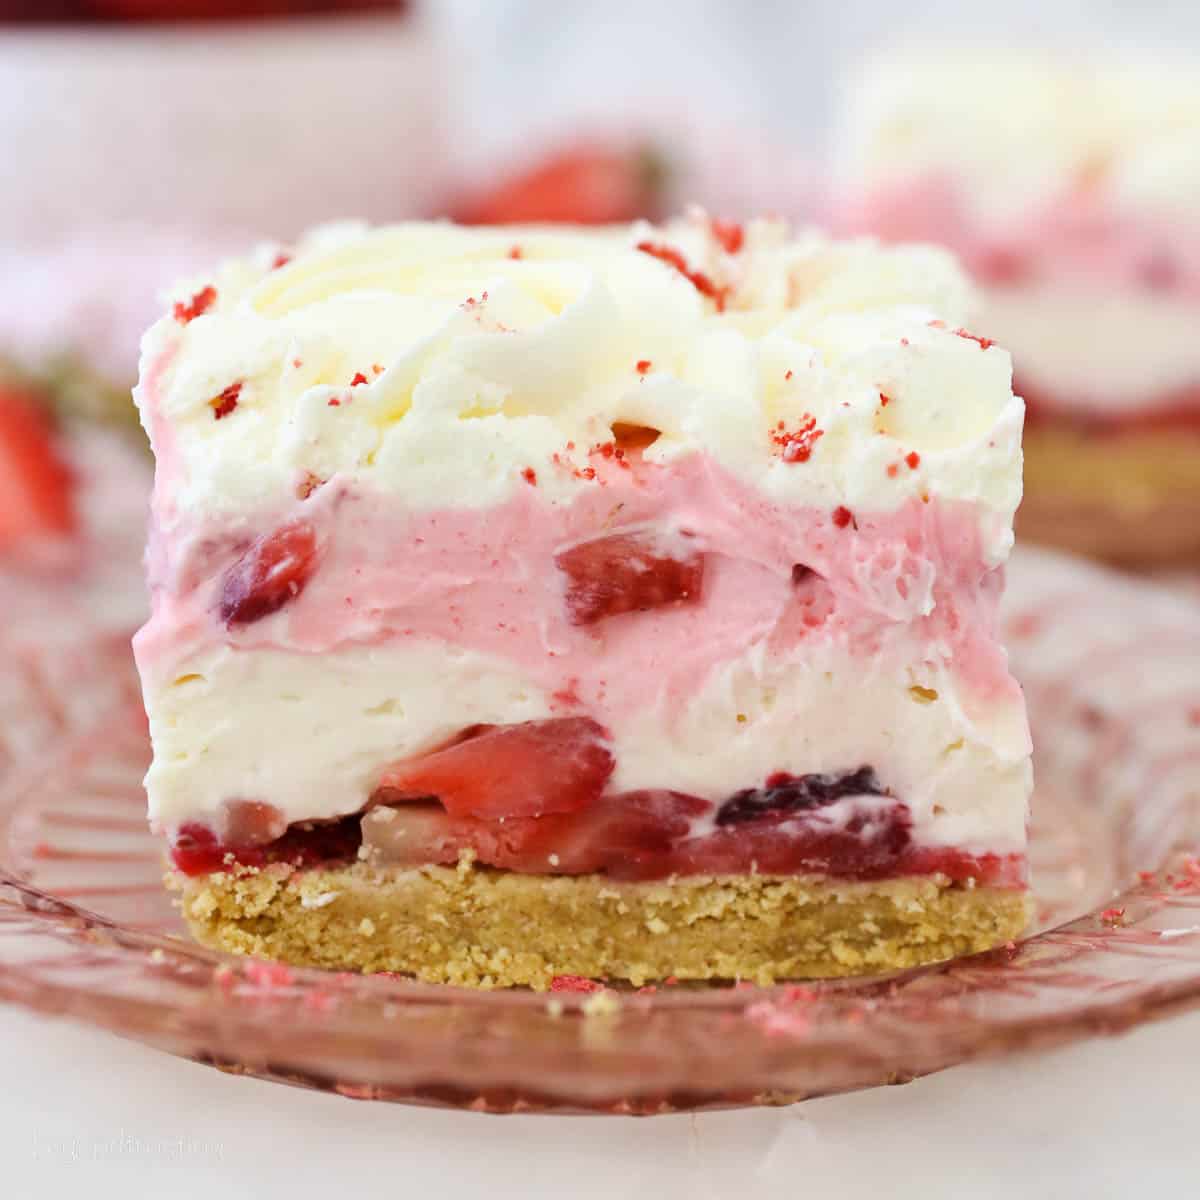 No Bake Strawberry Cheesecake recipe (VIDEO) - The Recipe Rebel